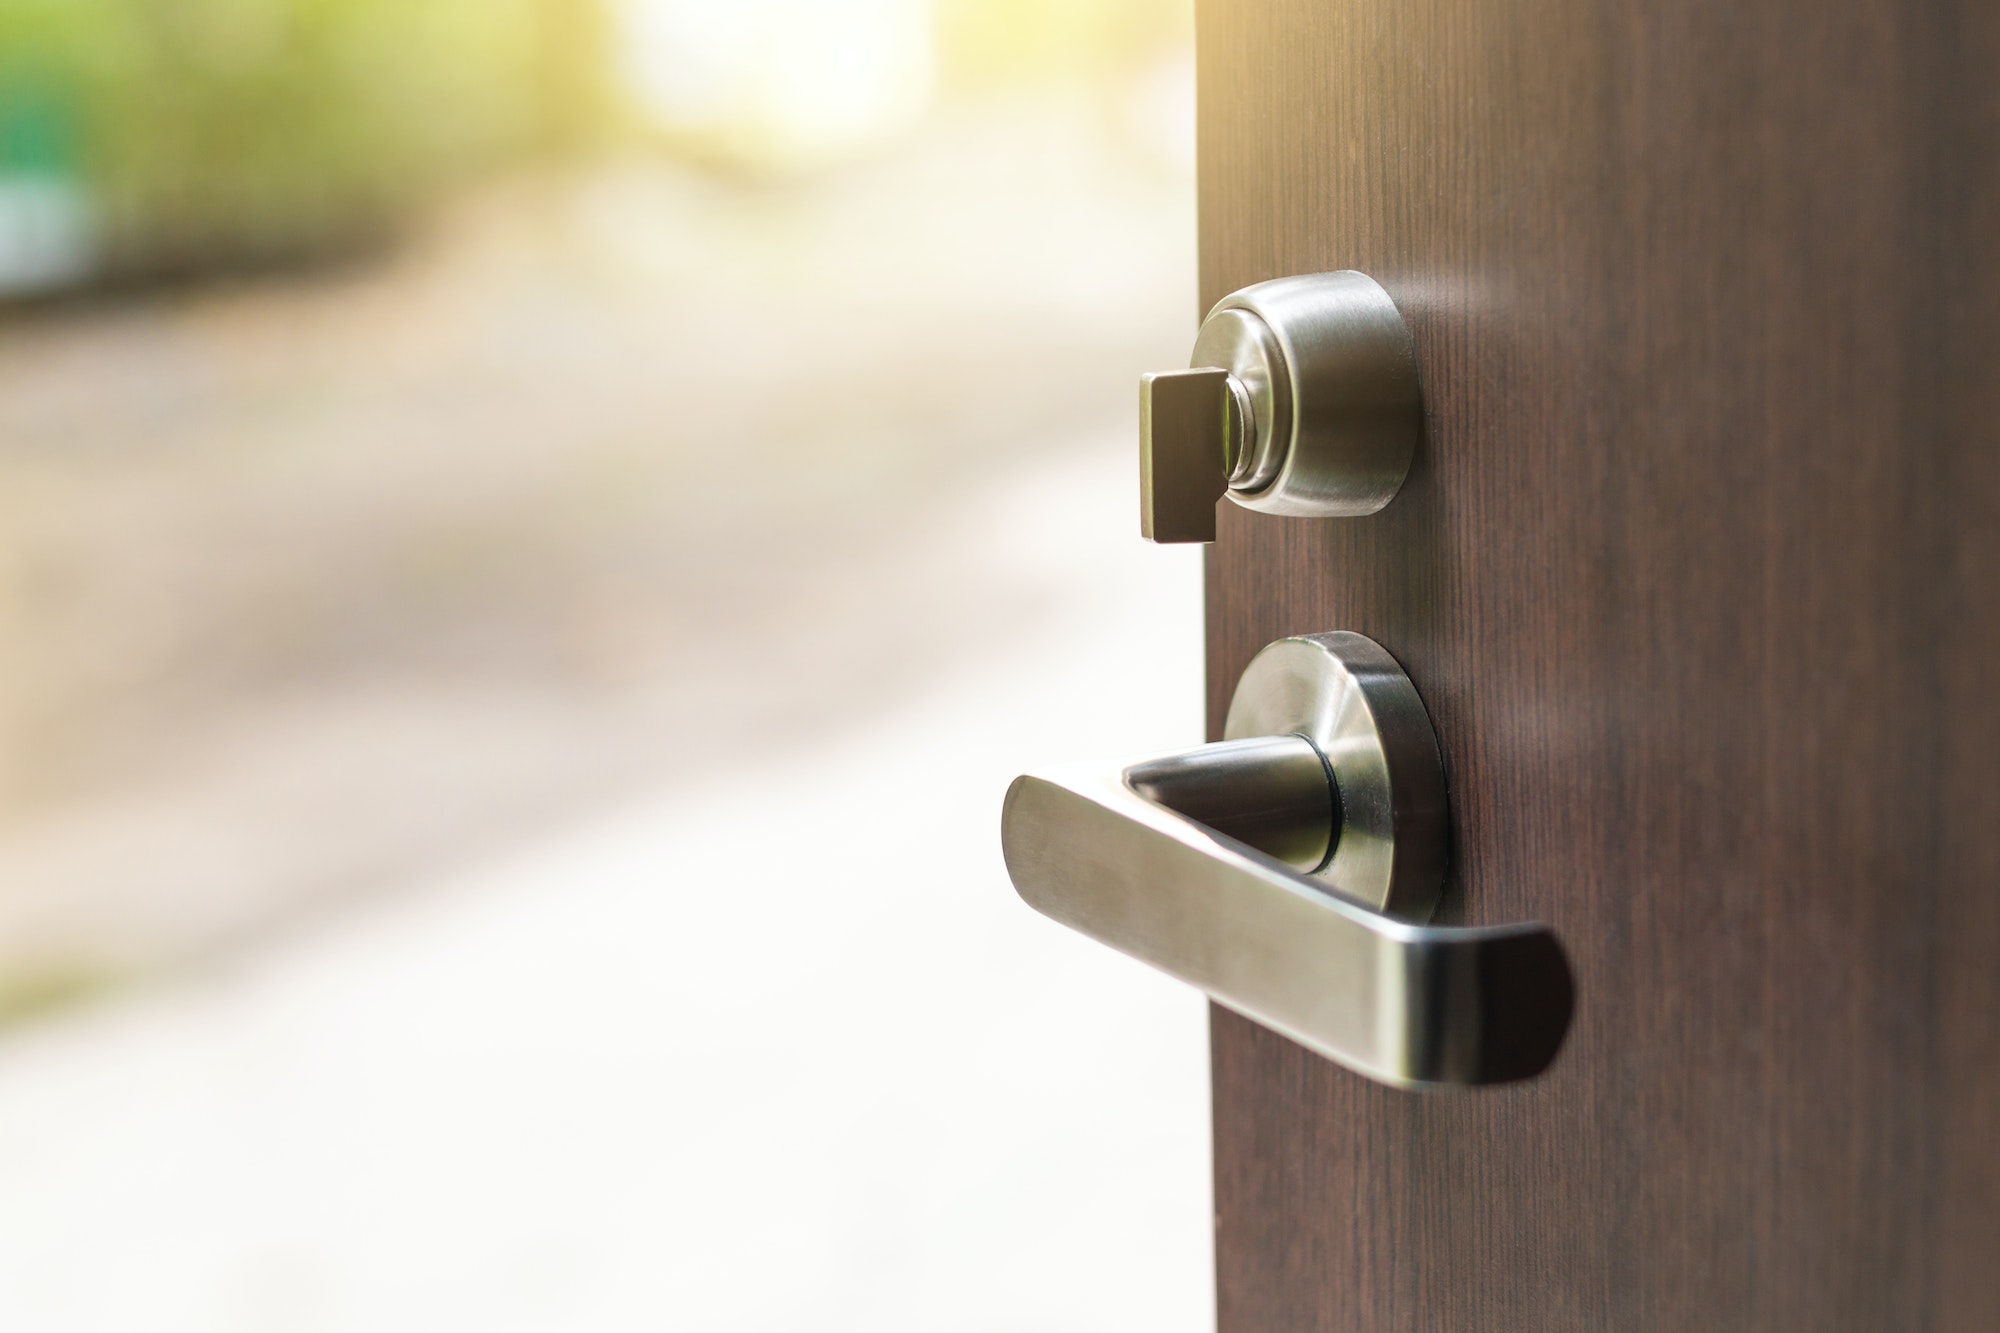 Open the modern wooden door with metal door handles lock to see outside nature view (Outdoors).